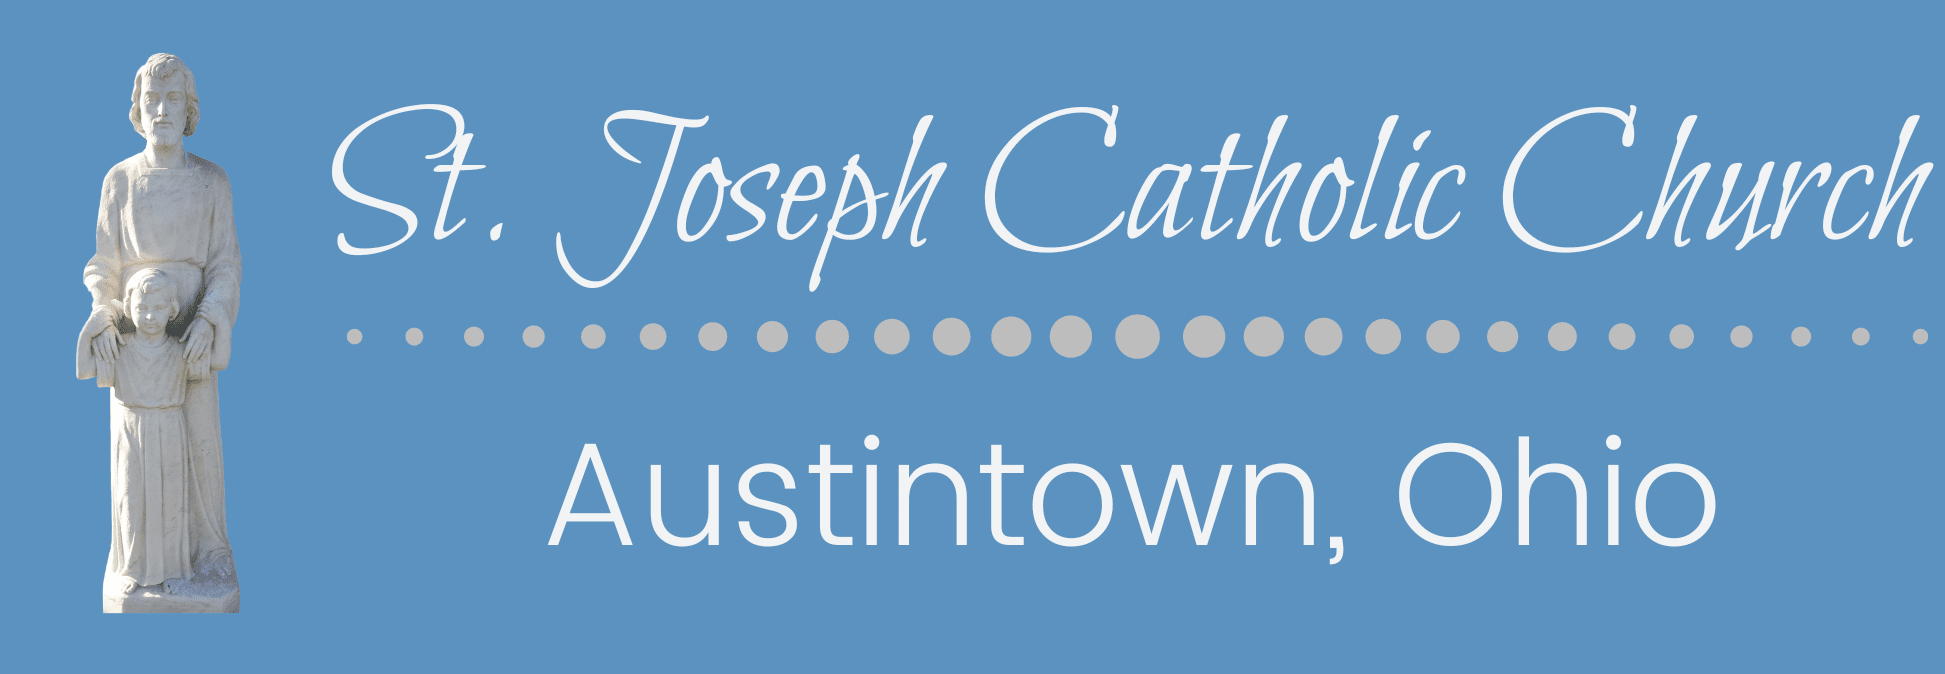 St. Joseph - Austintown